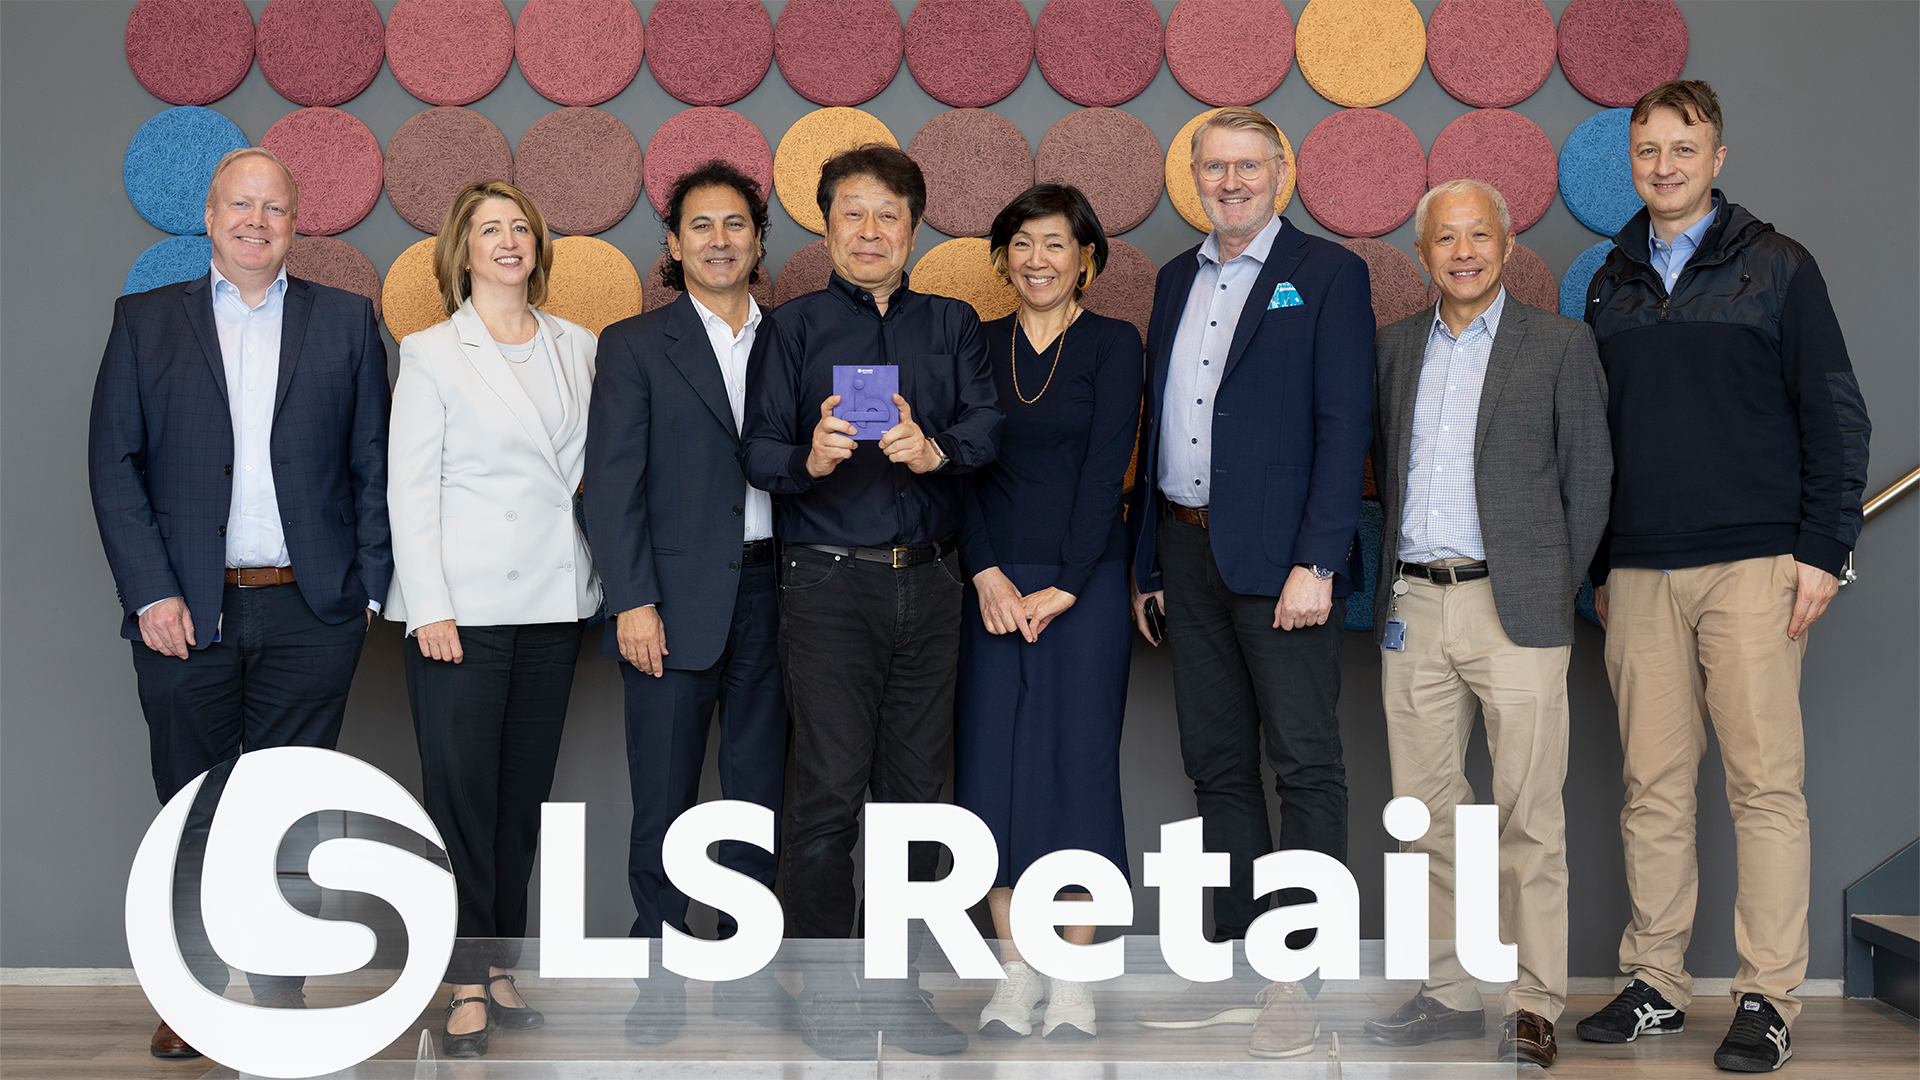 FUJIFILM MicroChannel, LS Retail Partner, receives top LS Retail Awards